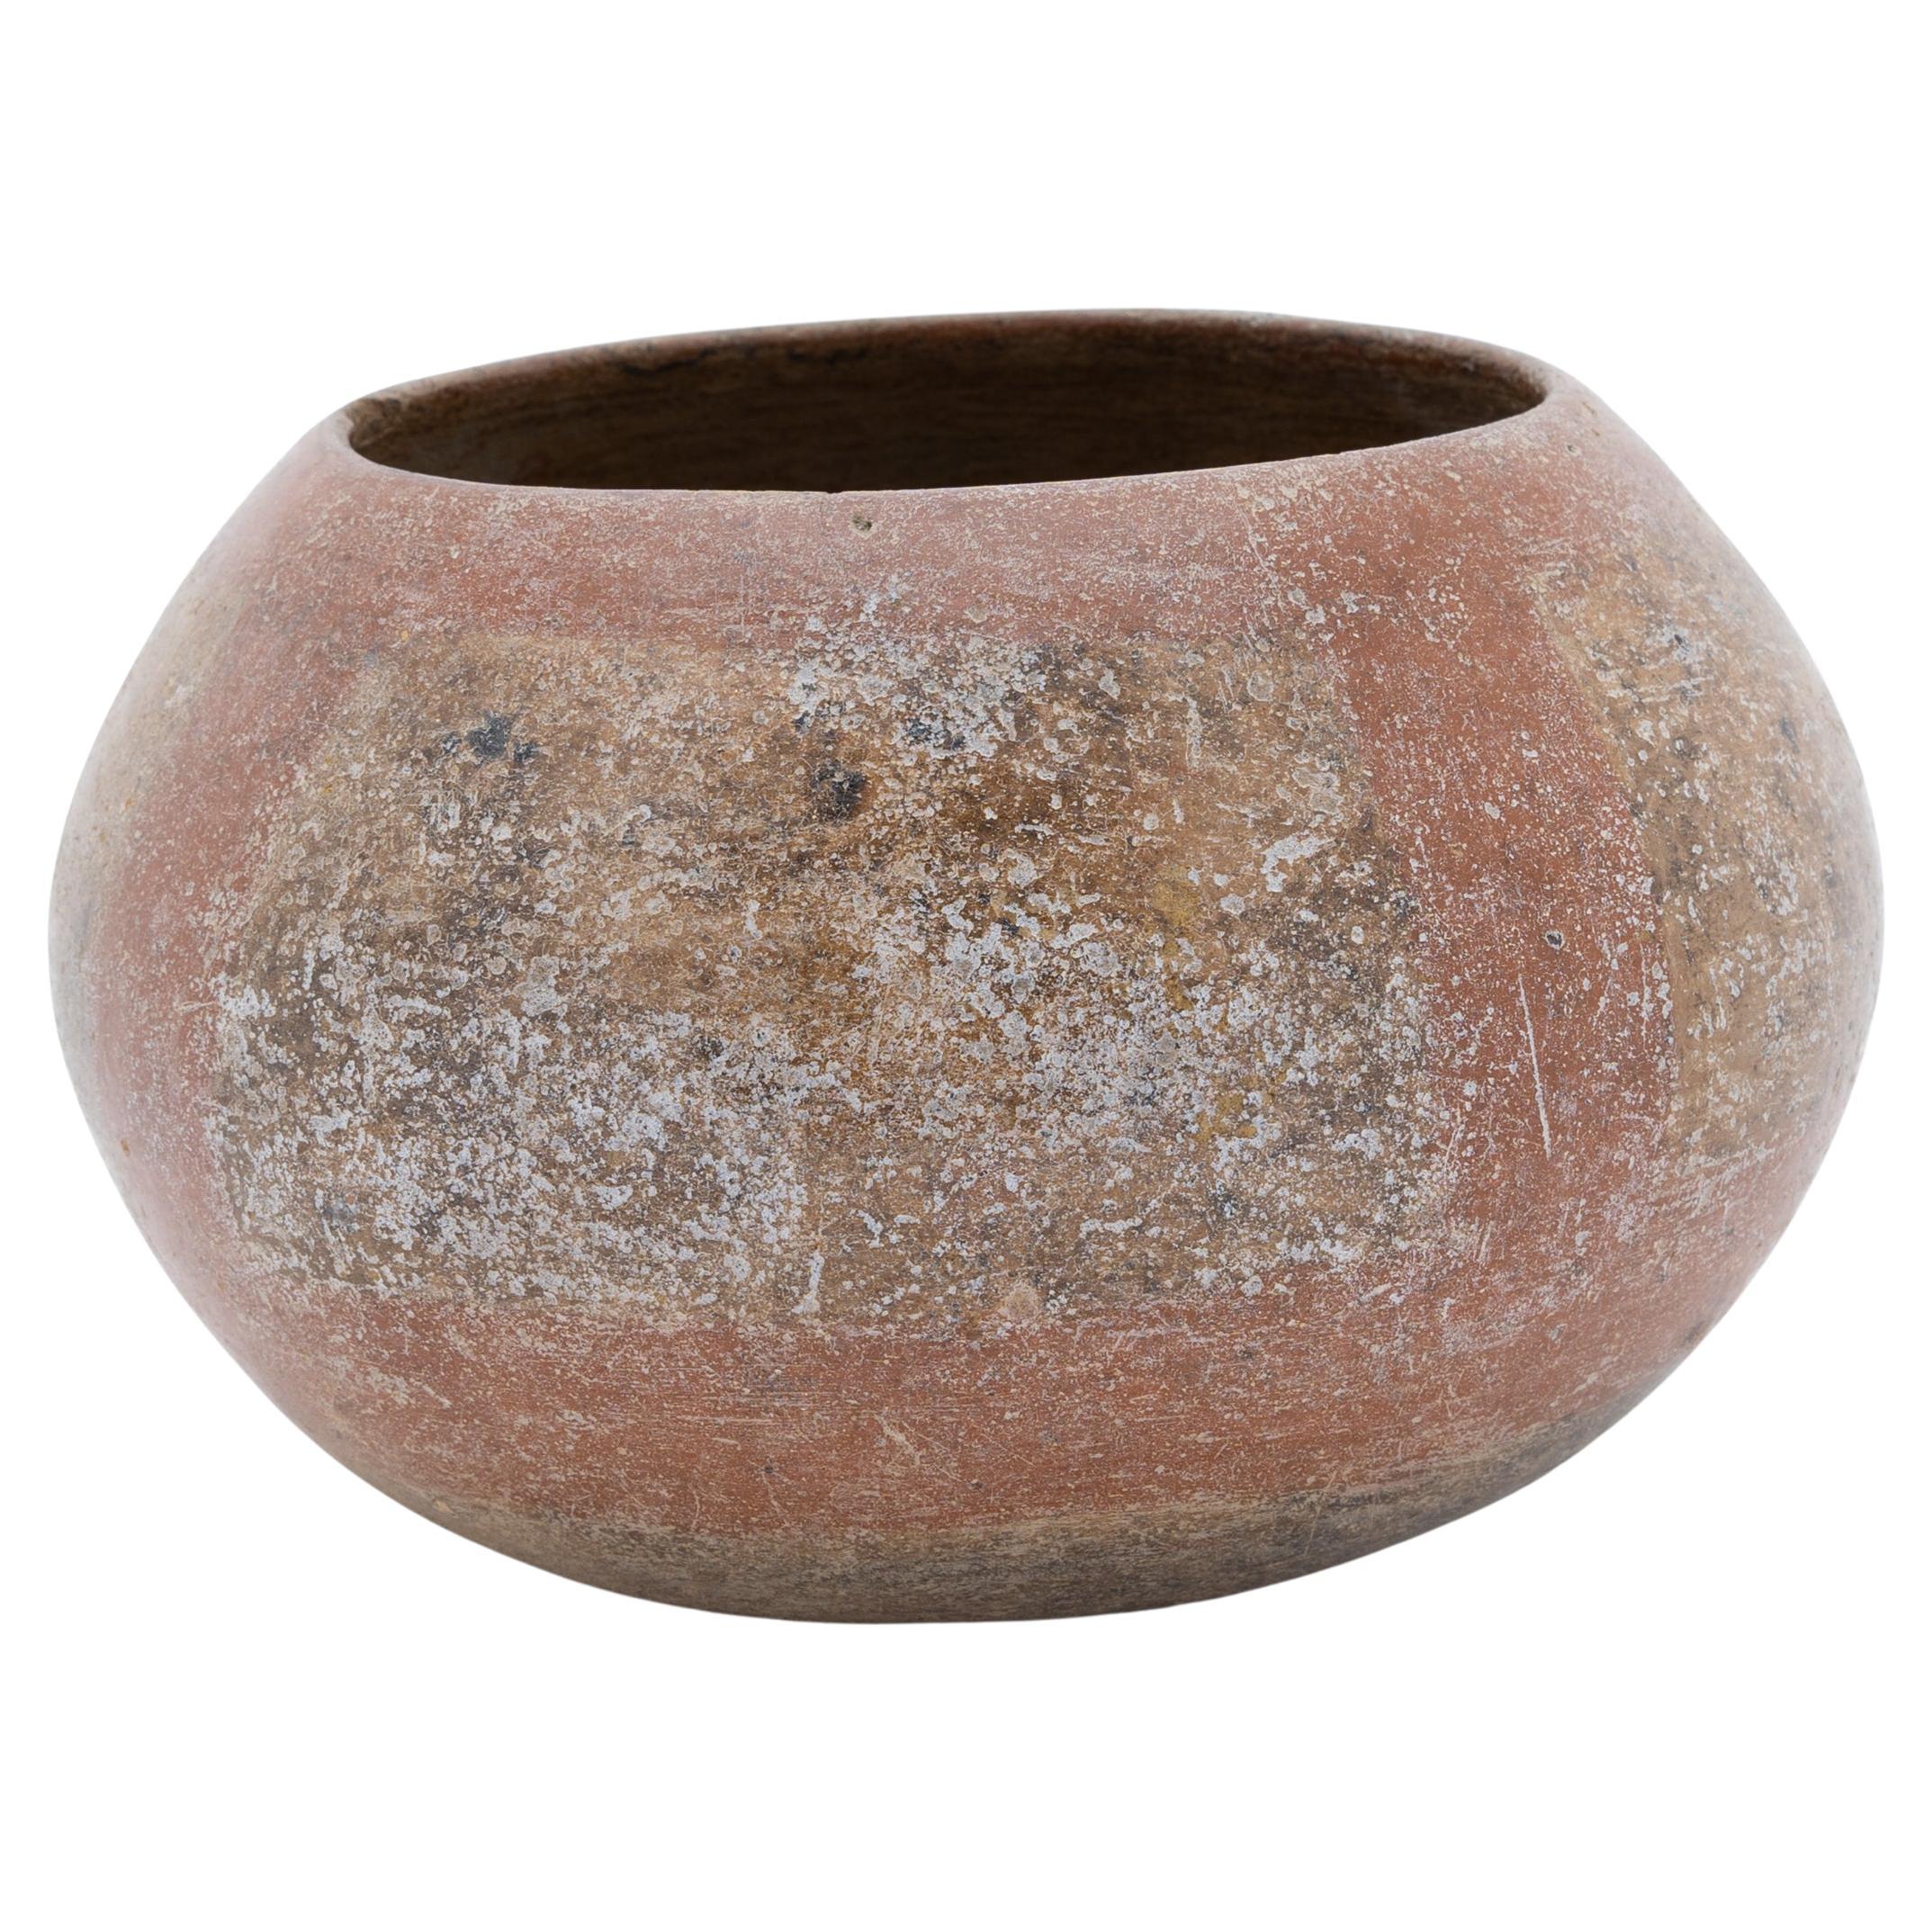 Pre-Columbian Round Redware Jar (JAR)